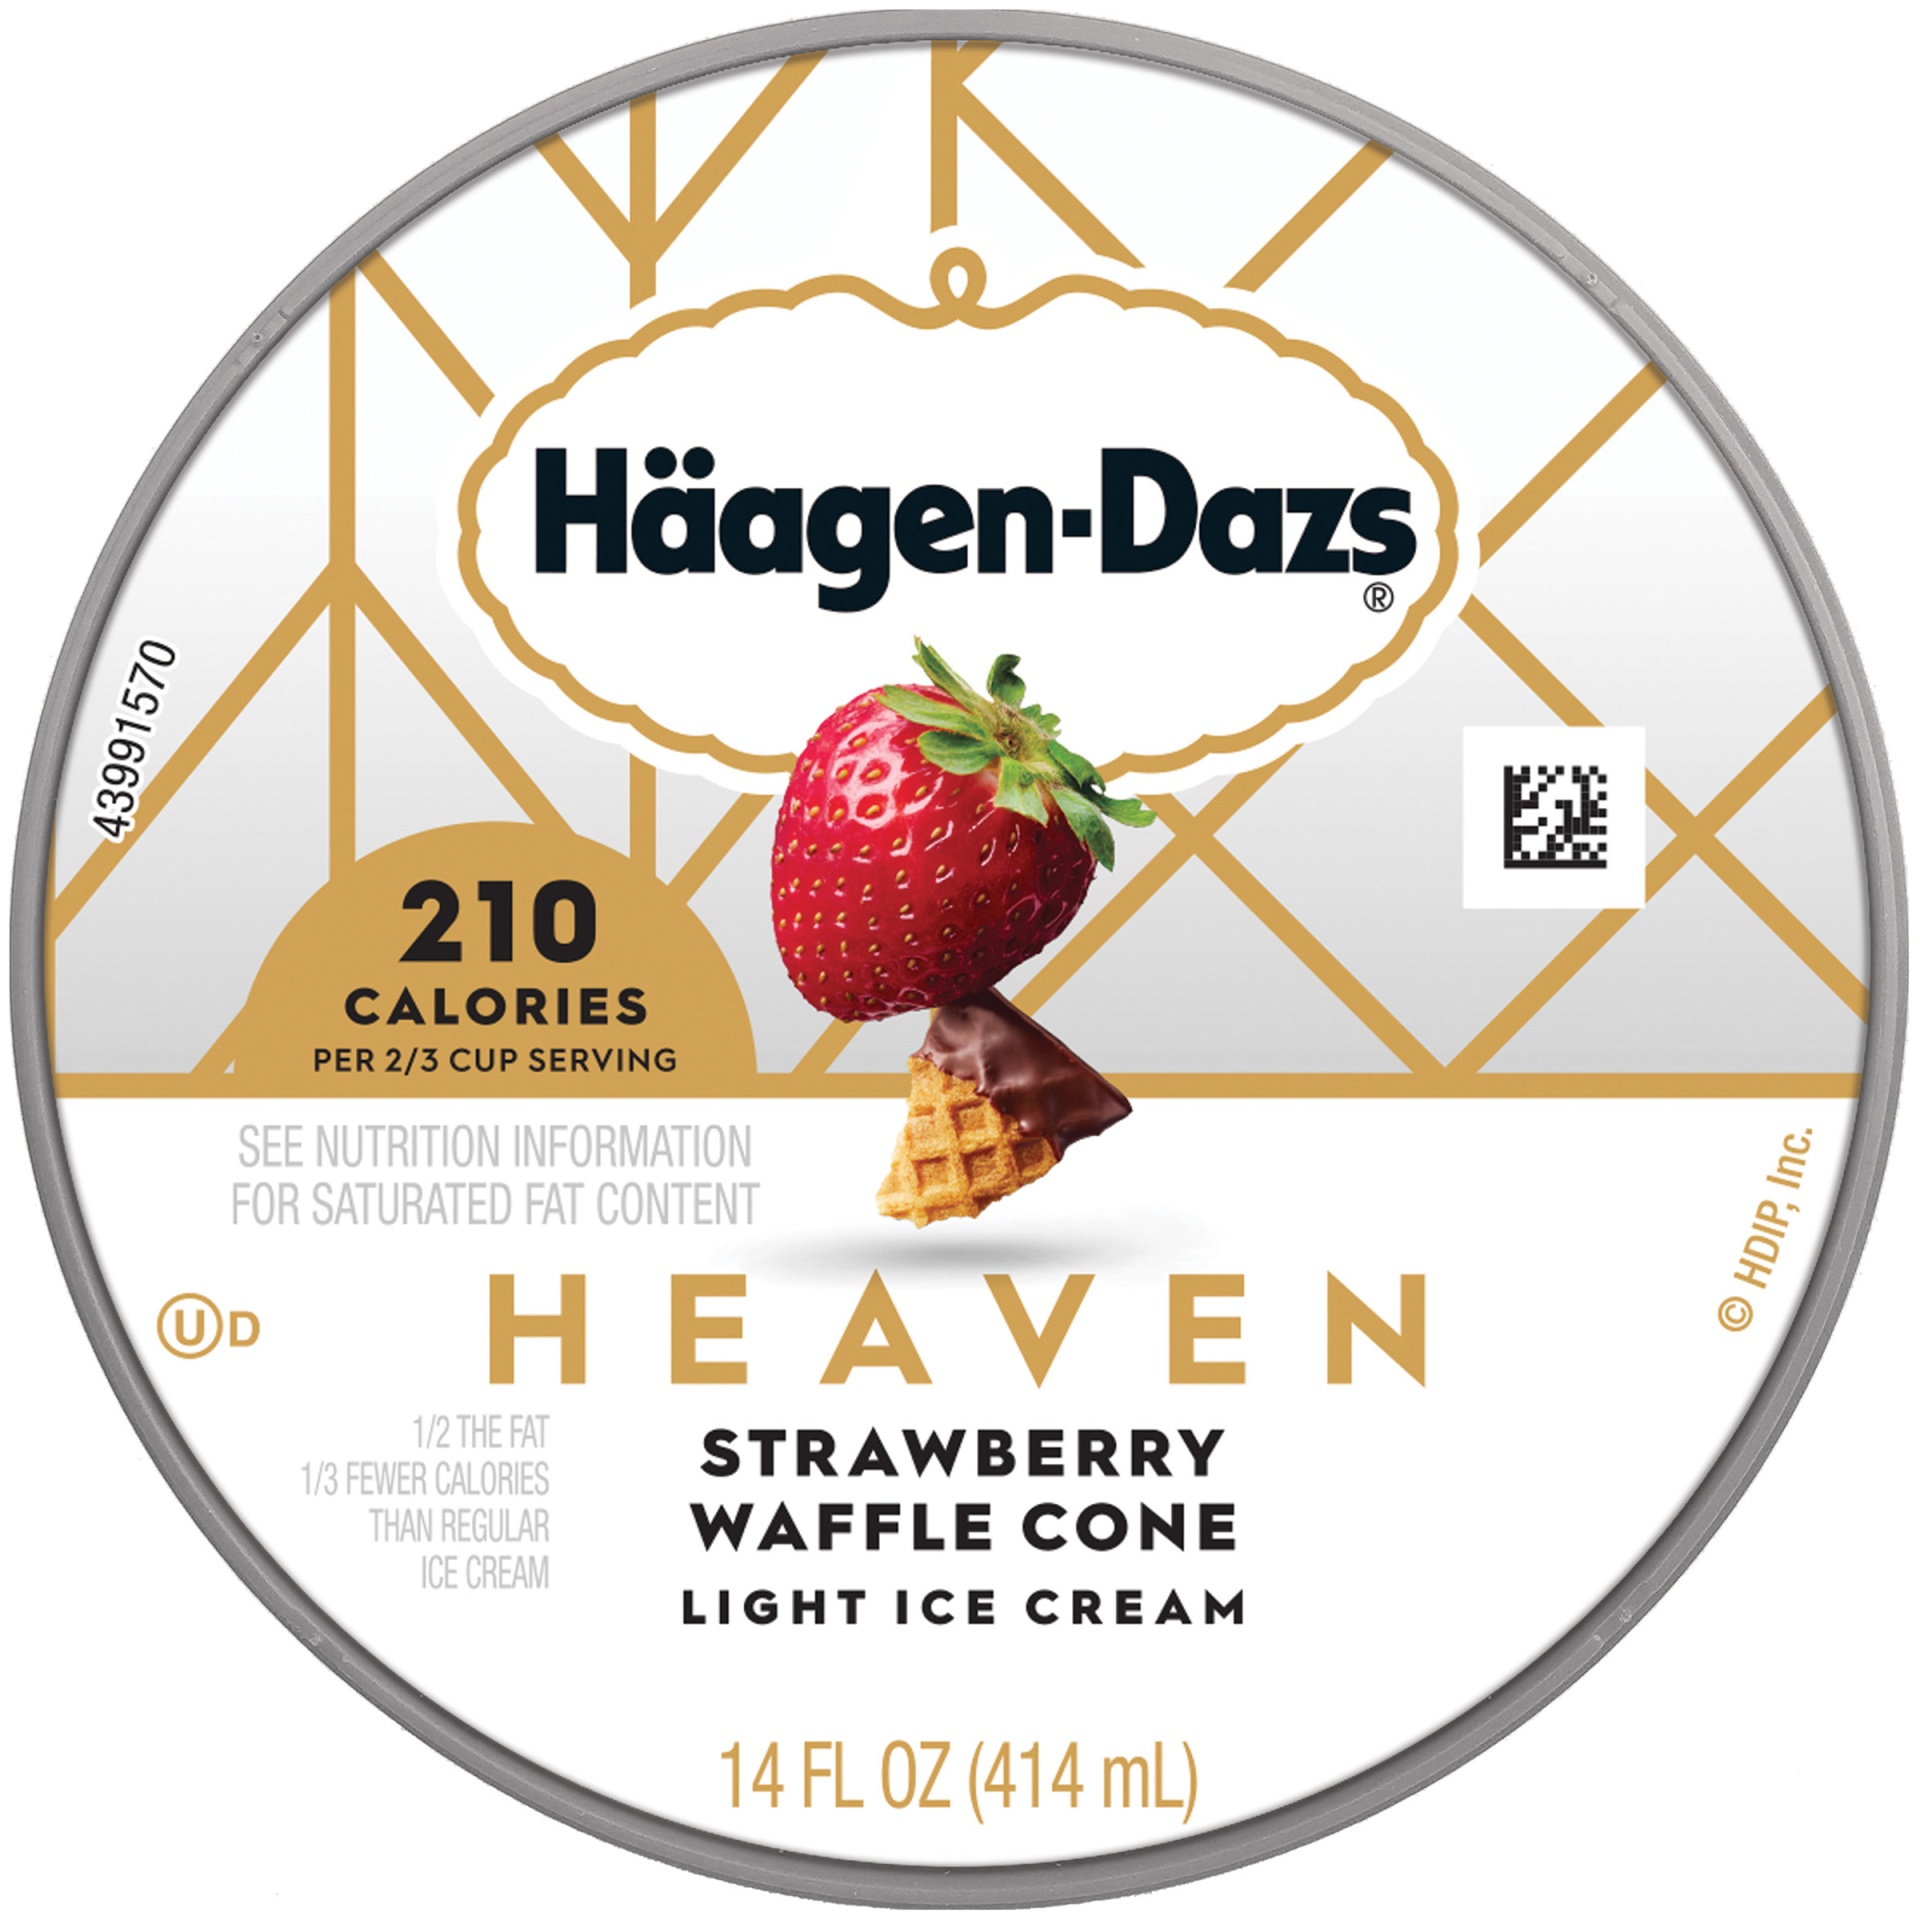 slide 7 of 7, Häagen-Dazs Heaven Strawberry Waffle Cone Light Ice Cream, 14 fl oz